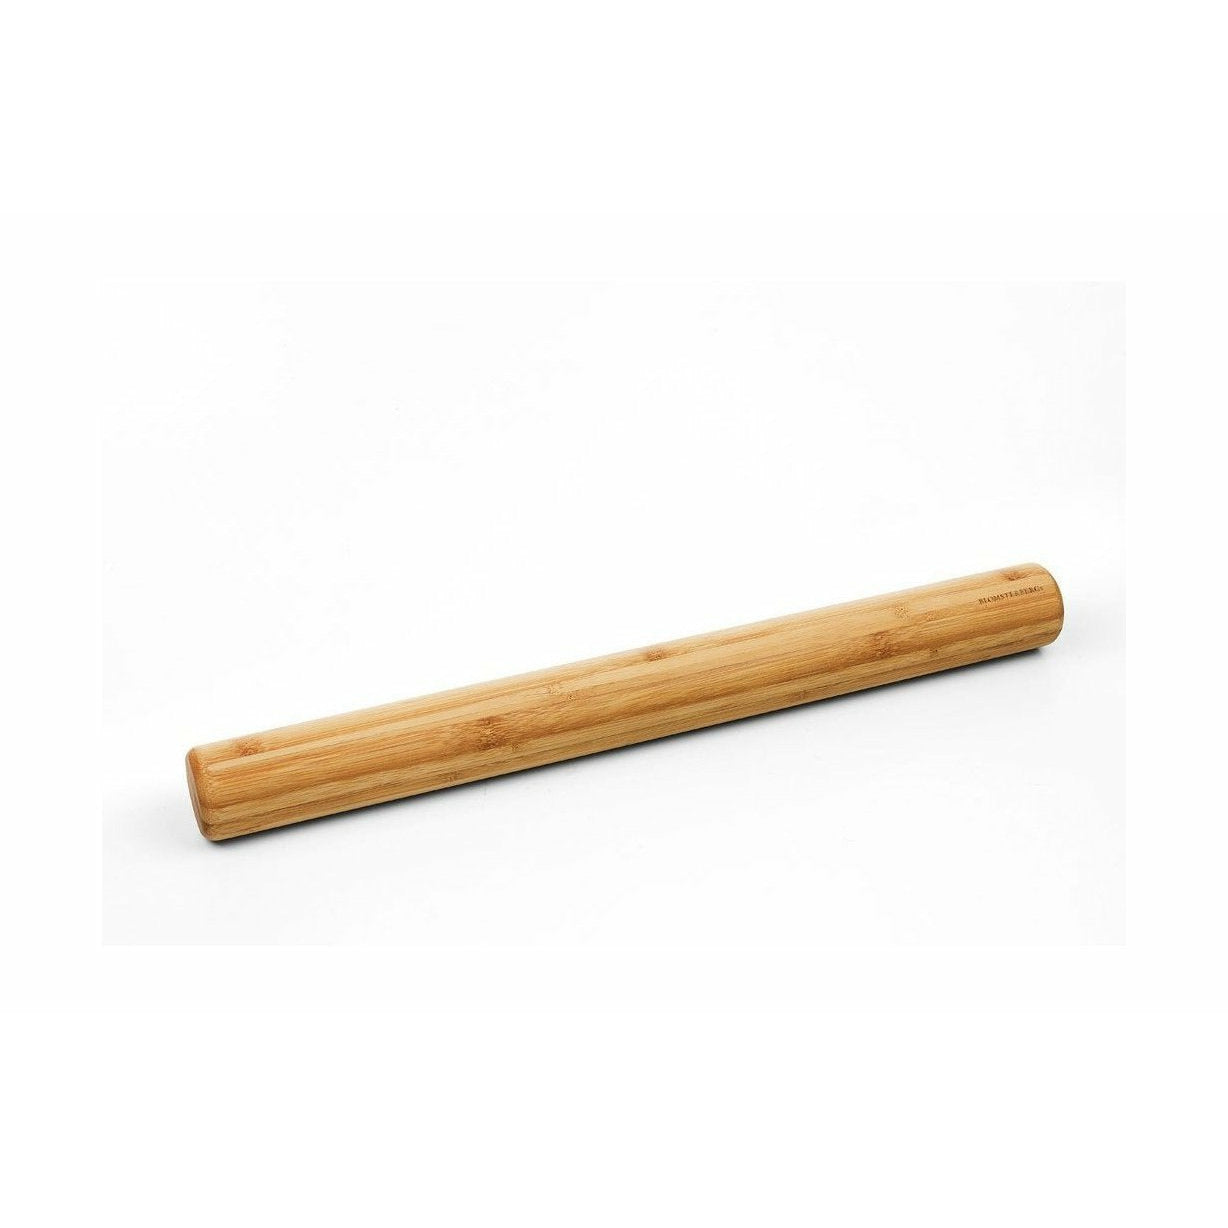 Blomsterbergs Roll Sticks Bamboo, 50,8 cm